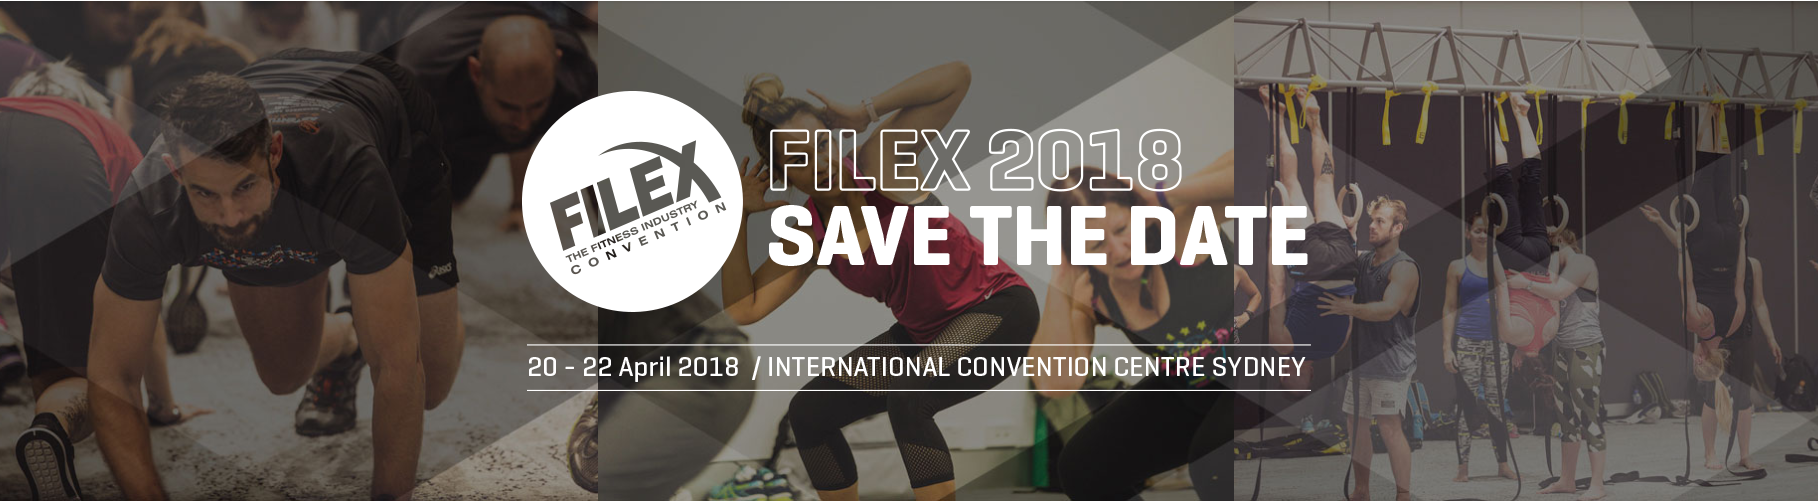 Fitness Australia-led joint venture acquires FILEX convention